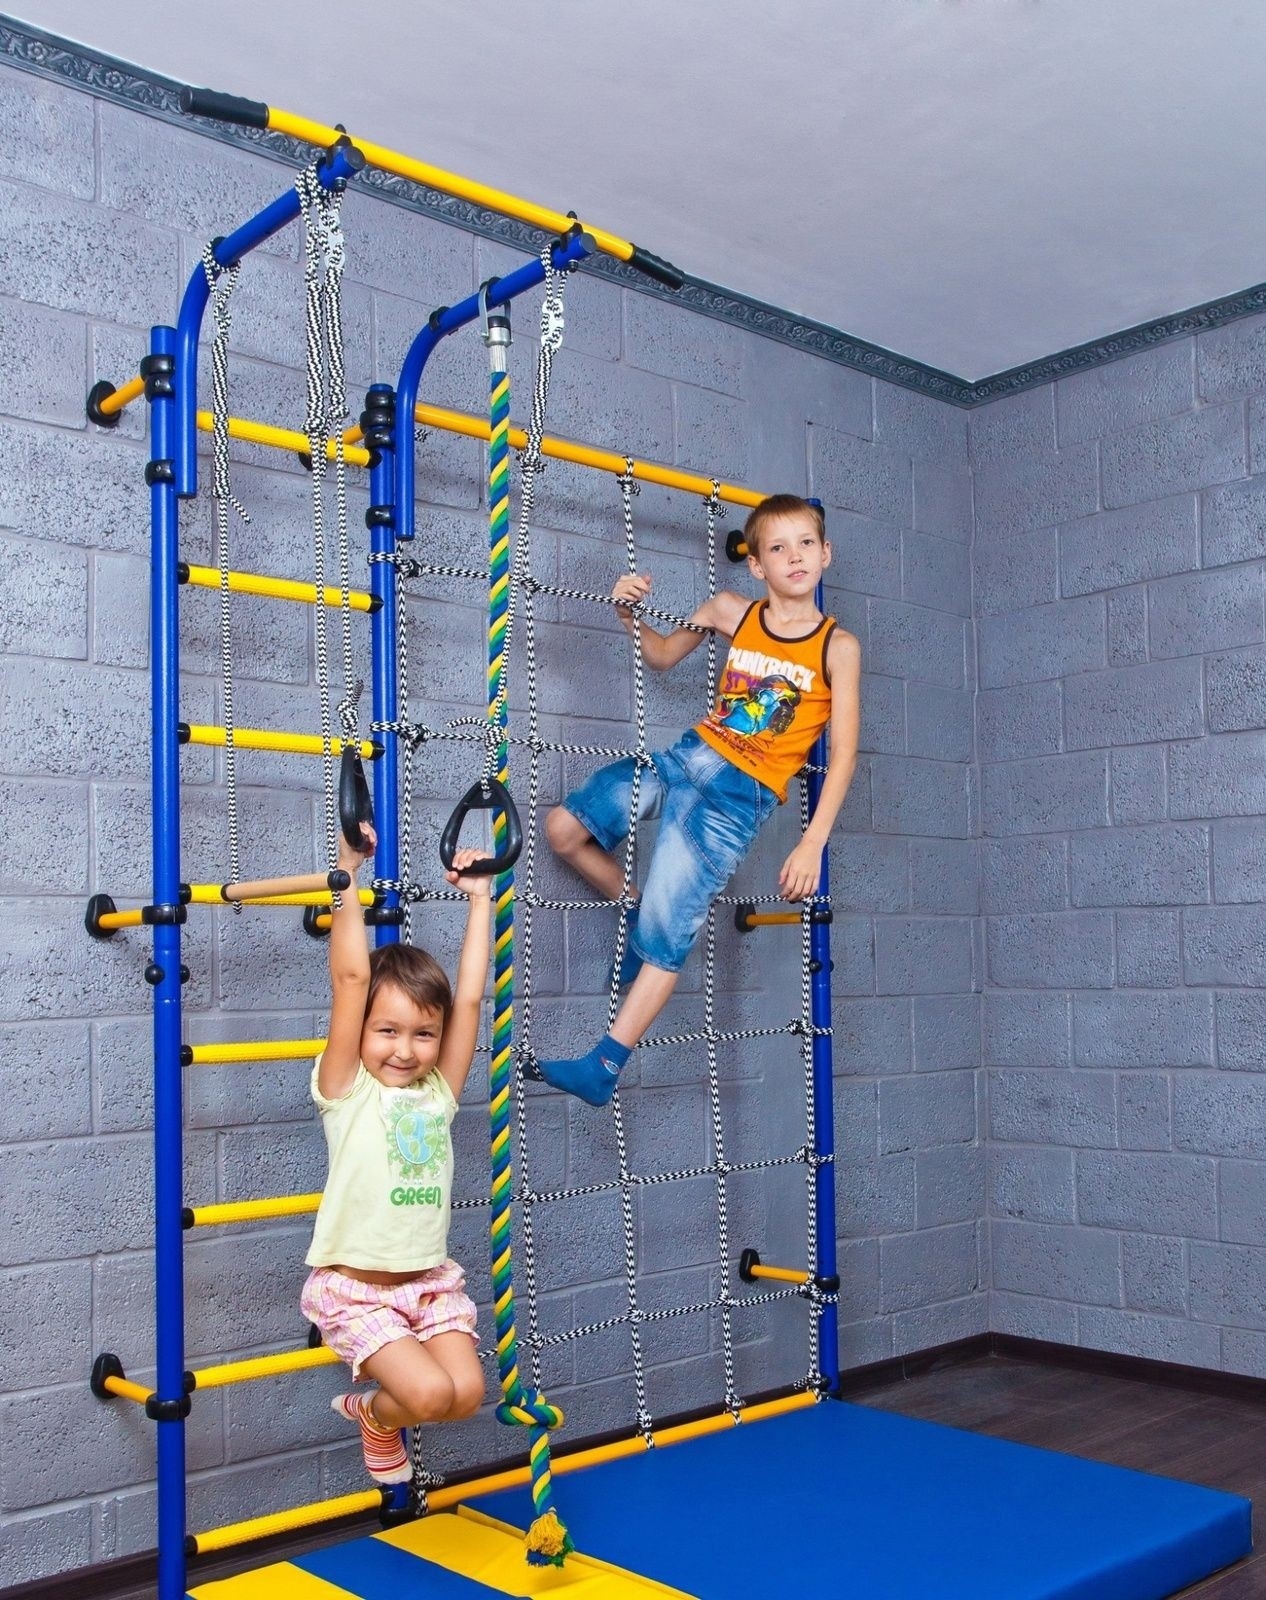 Gym Equipment For Kids - Foter